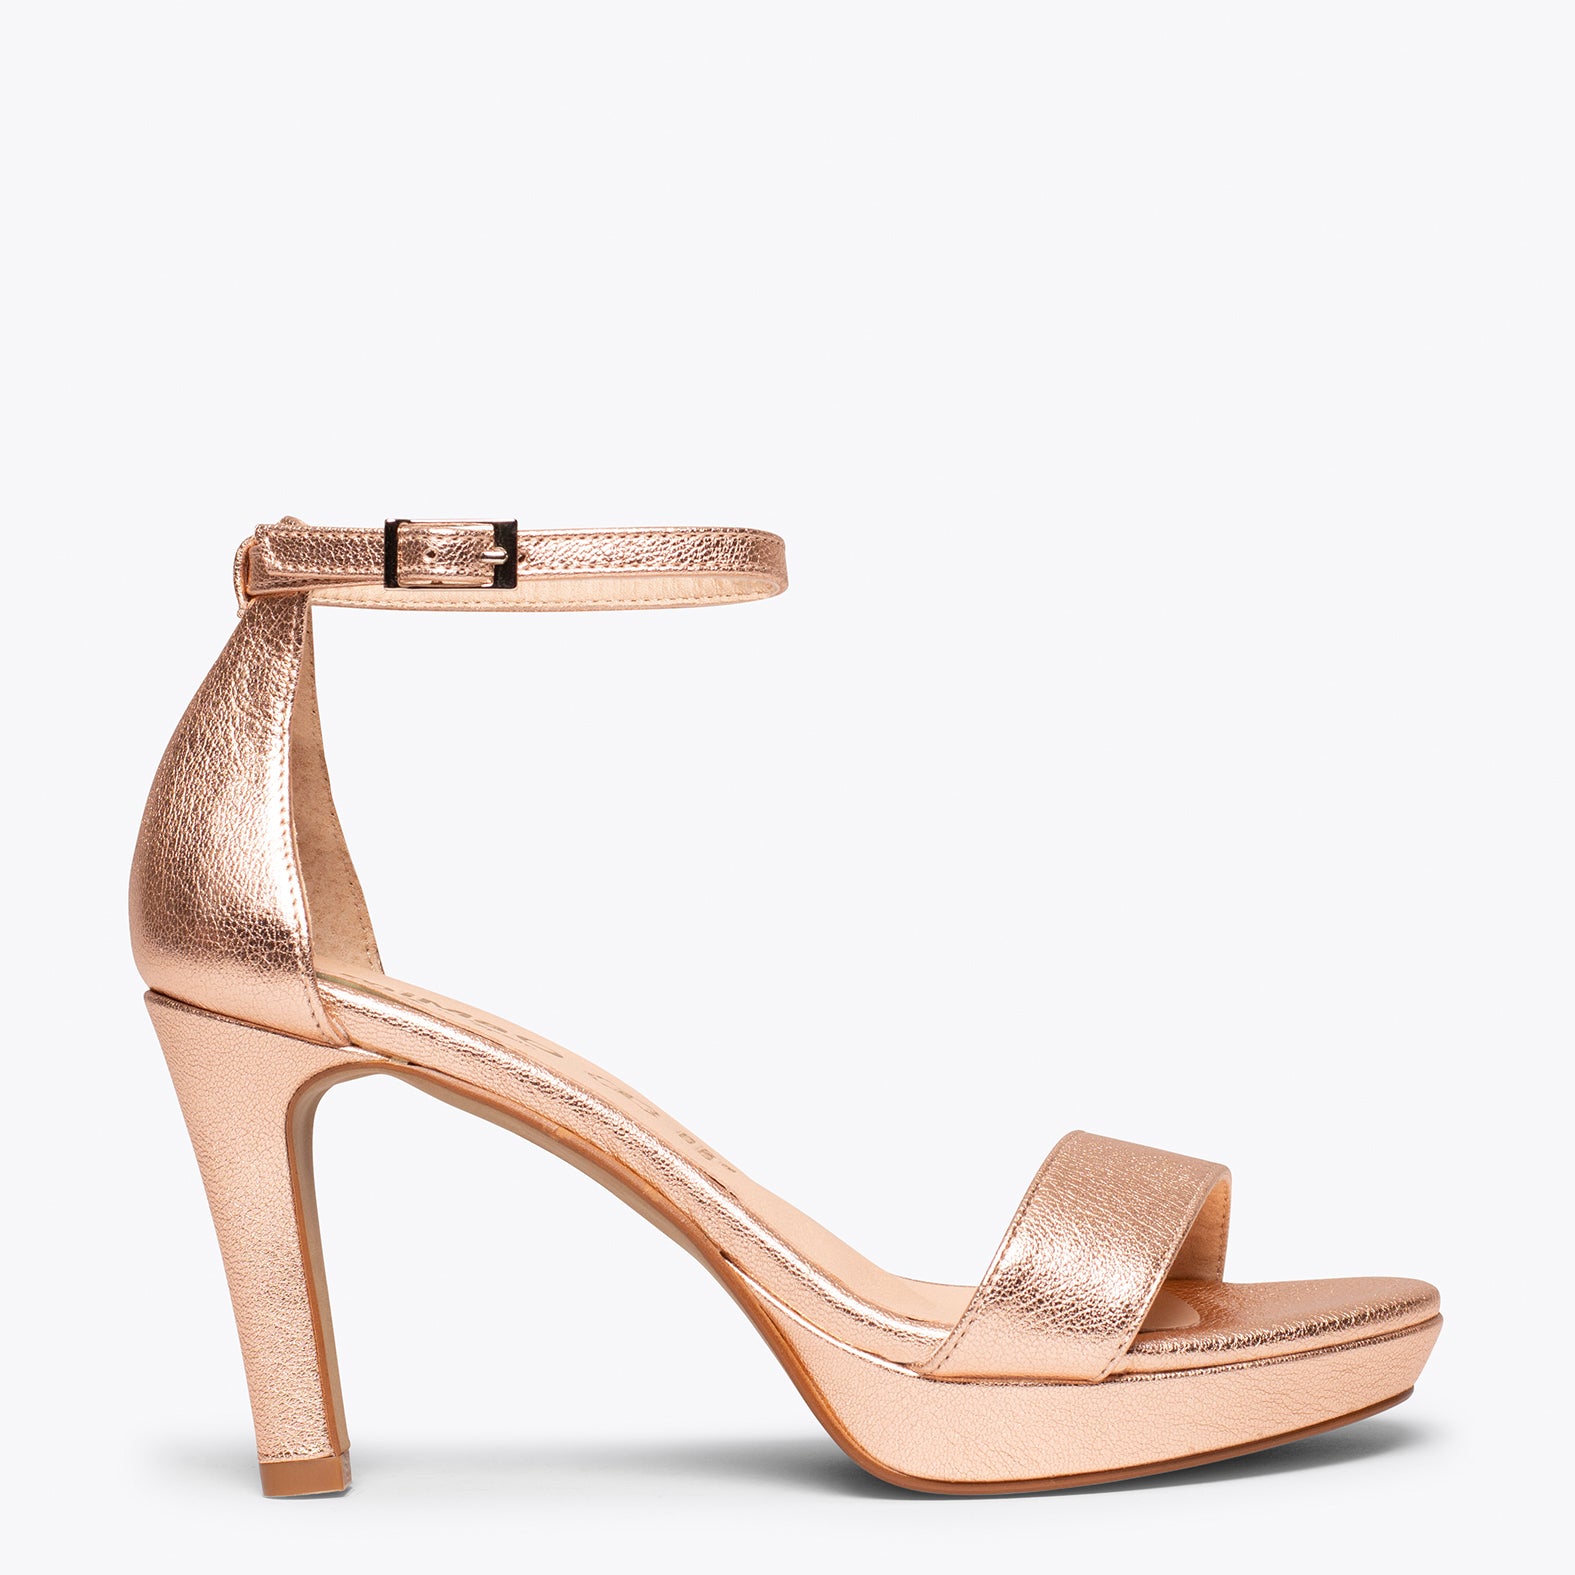 PARTY – ROSE high heel sandals with platform